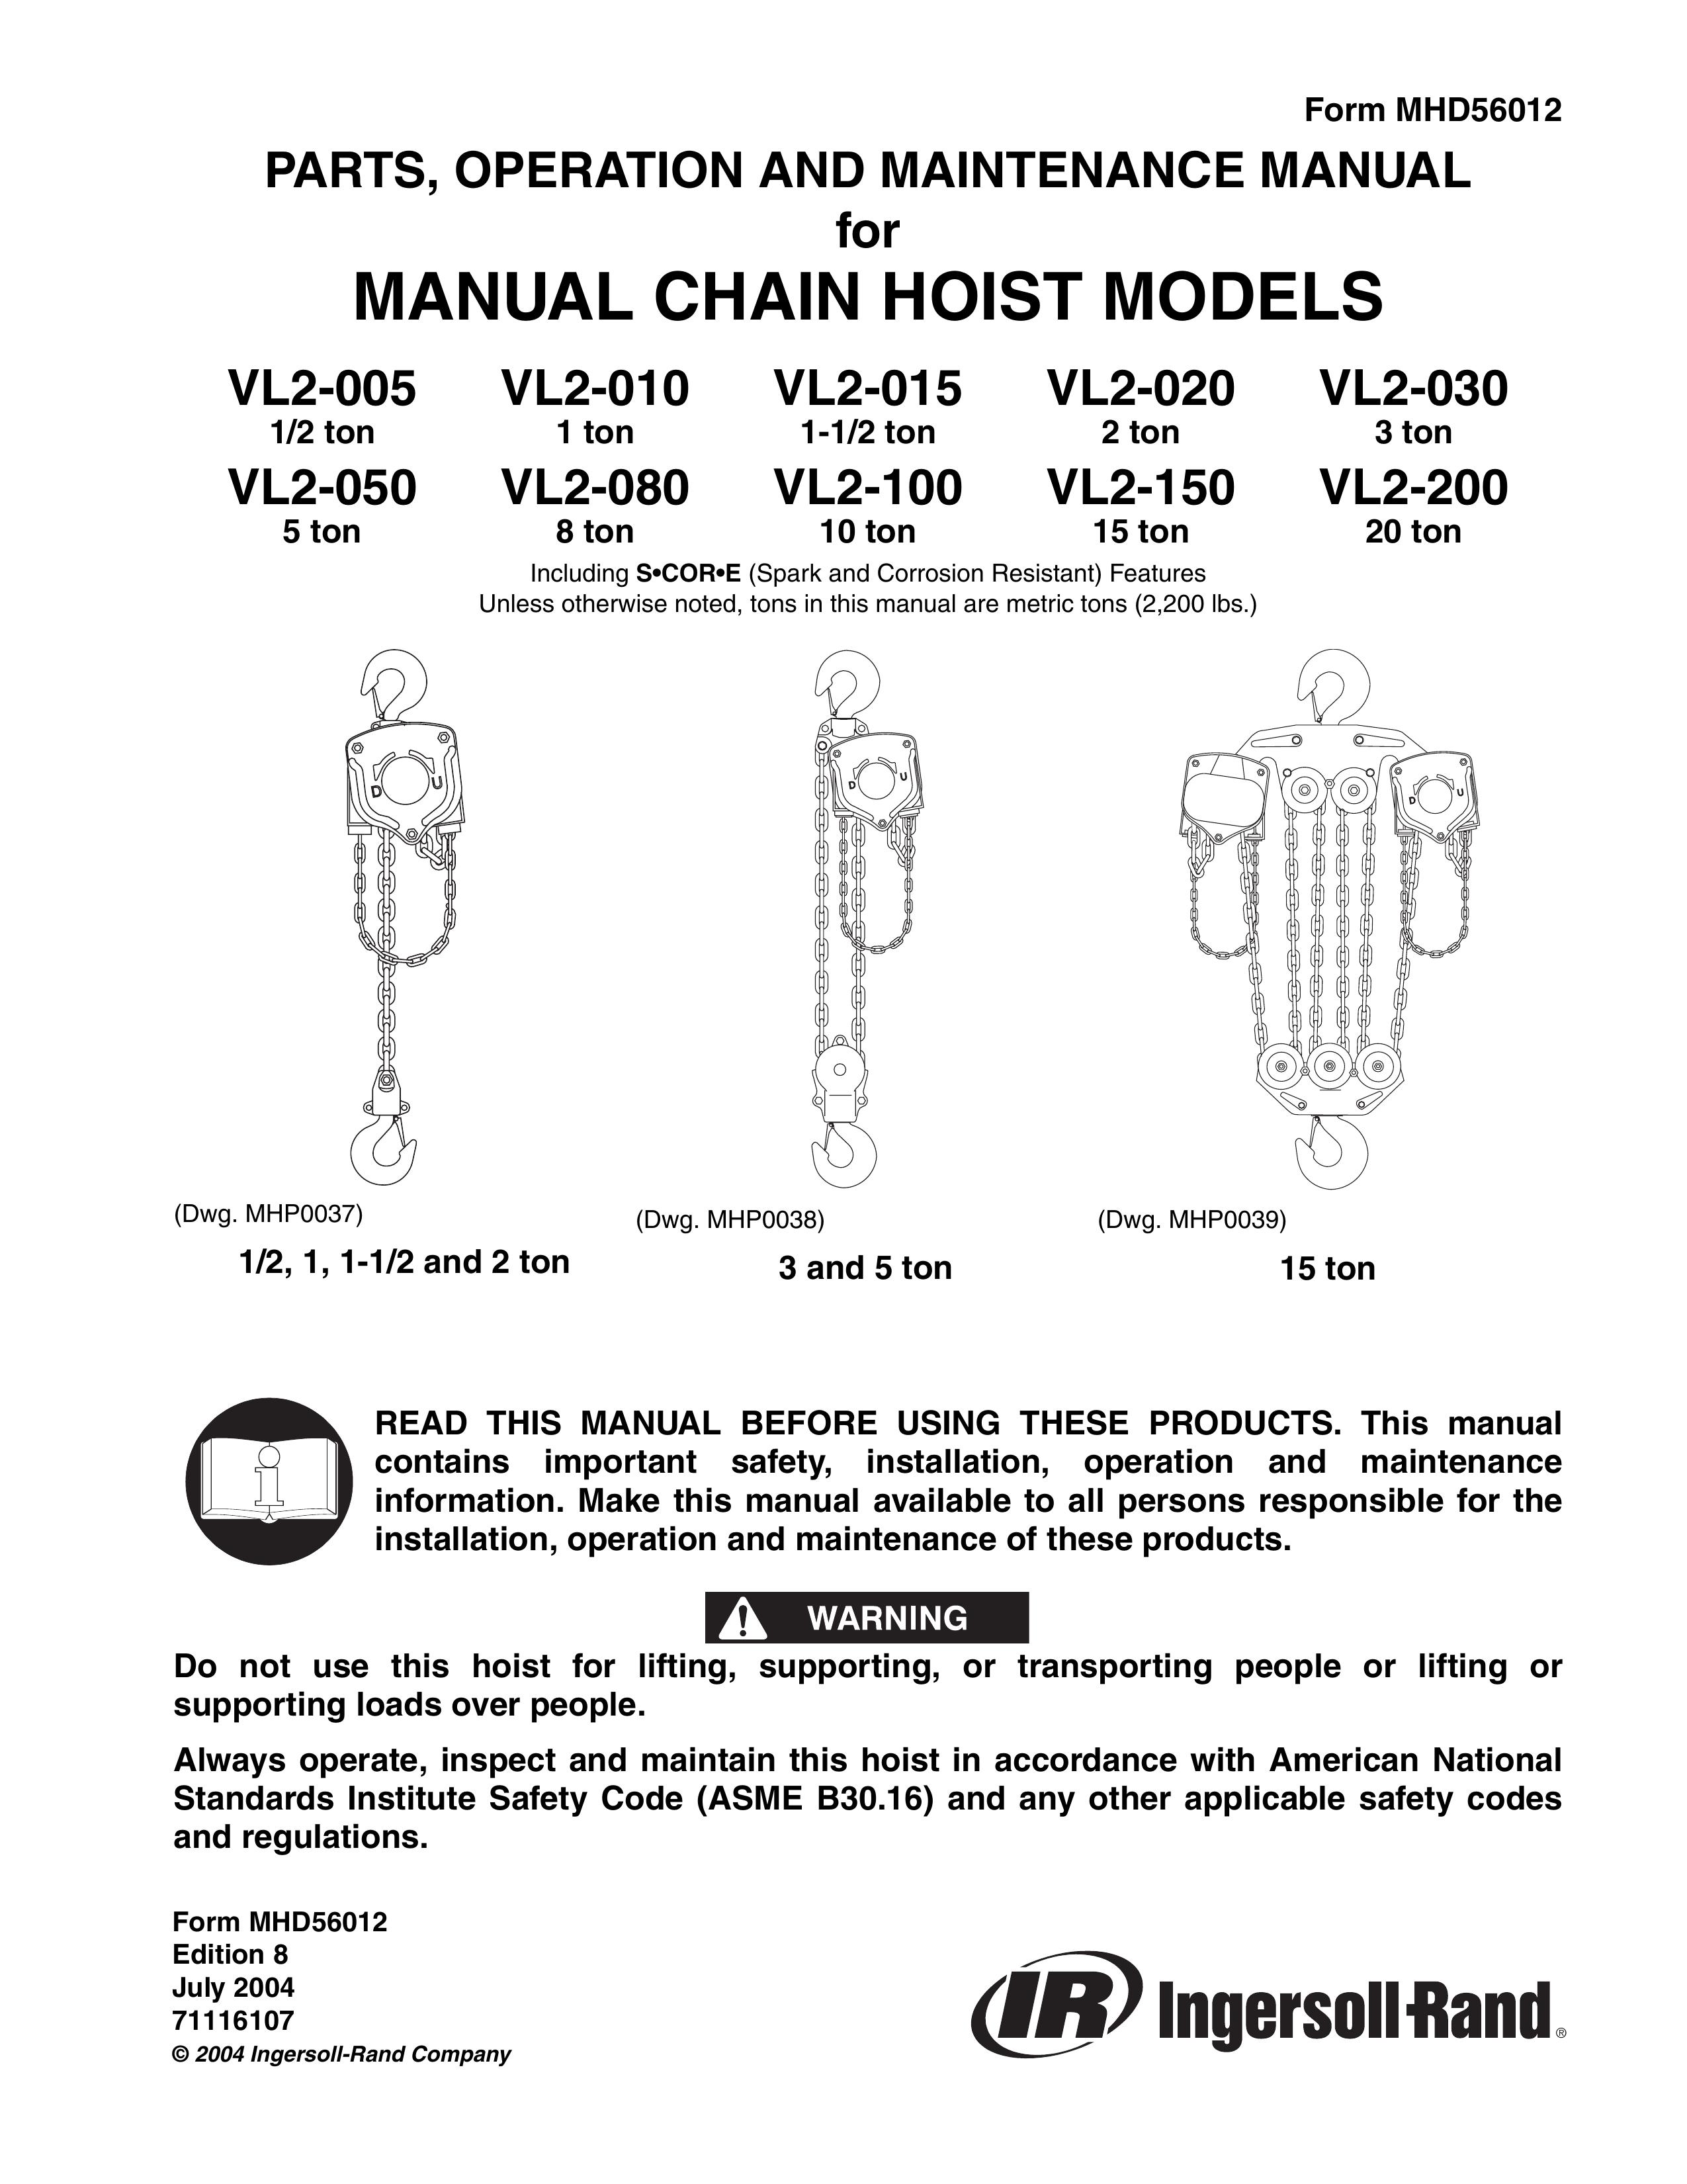 Ingersoll-Rand VL2-005 Digital Photo Keychain User Manual